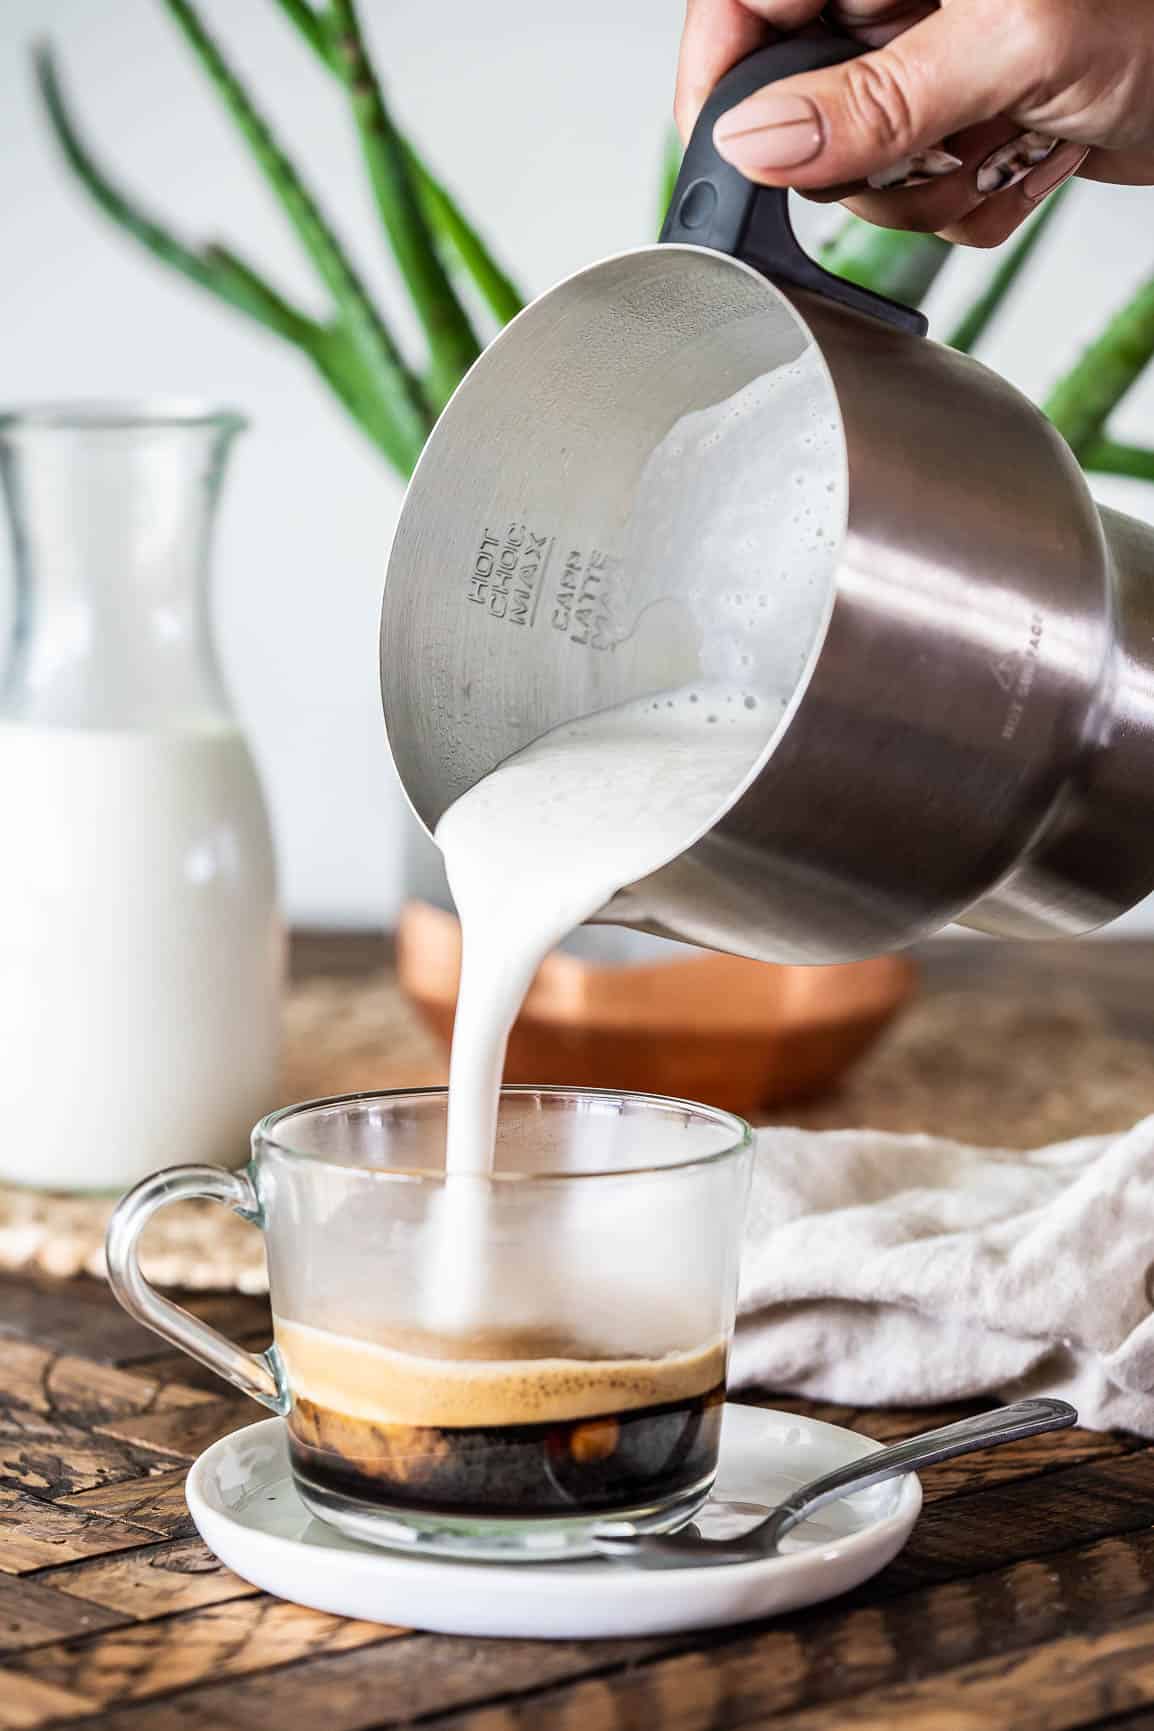 Keto Friendly Coffee Creamer – Health Starts in the Kitchen